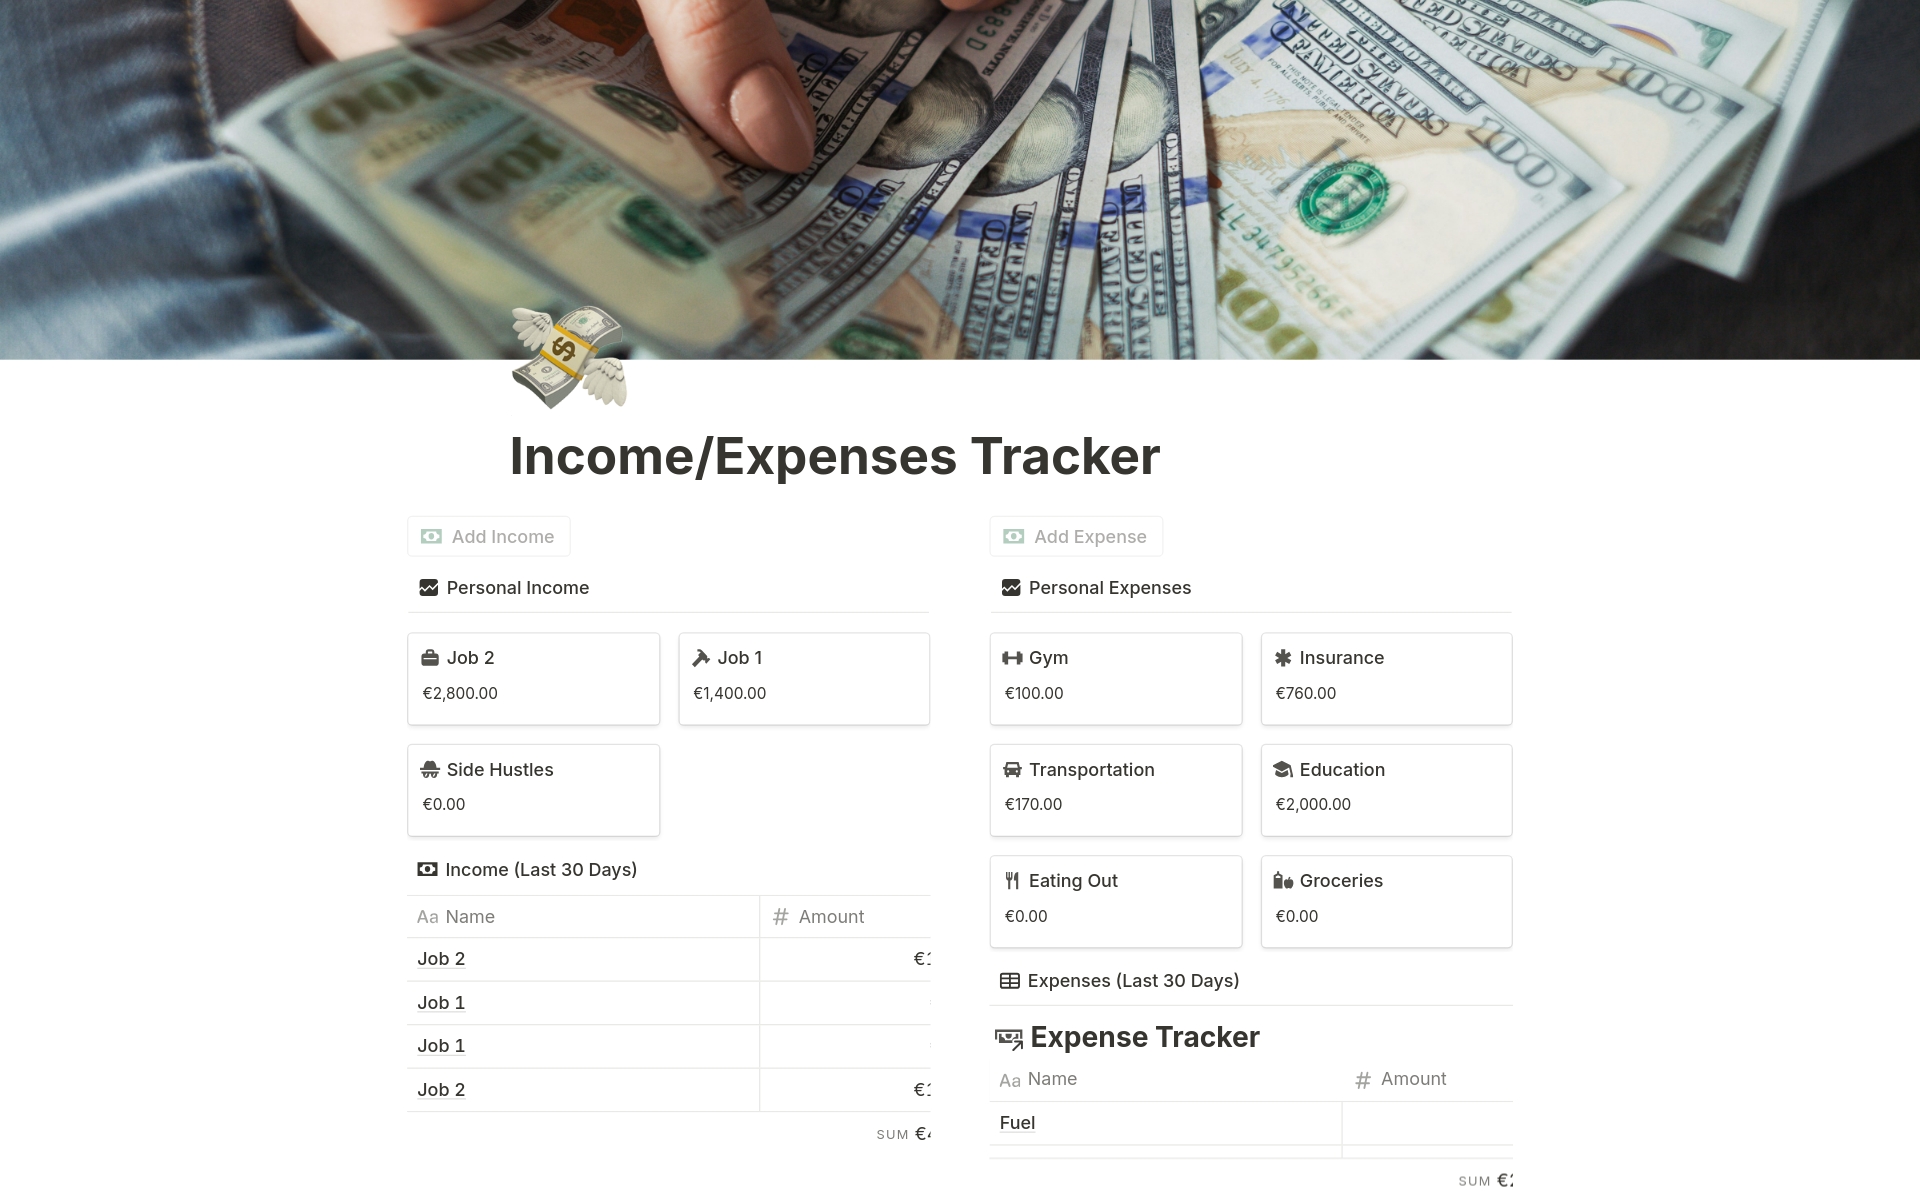 Aperçu du modèle de Income/Expenses Tracker